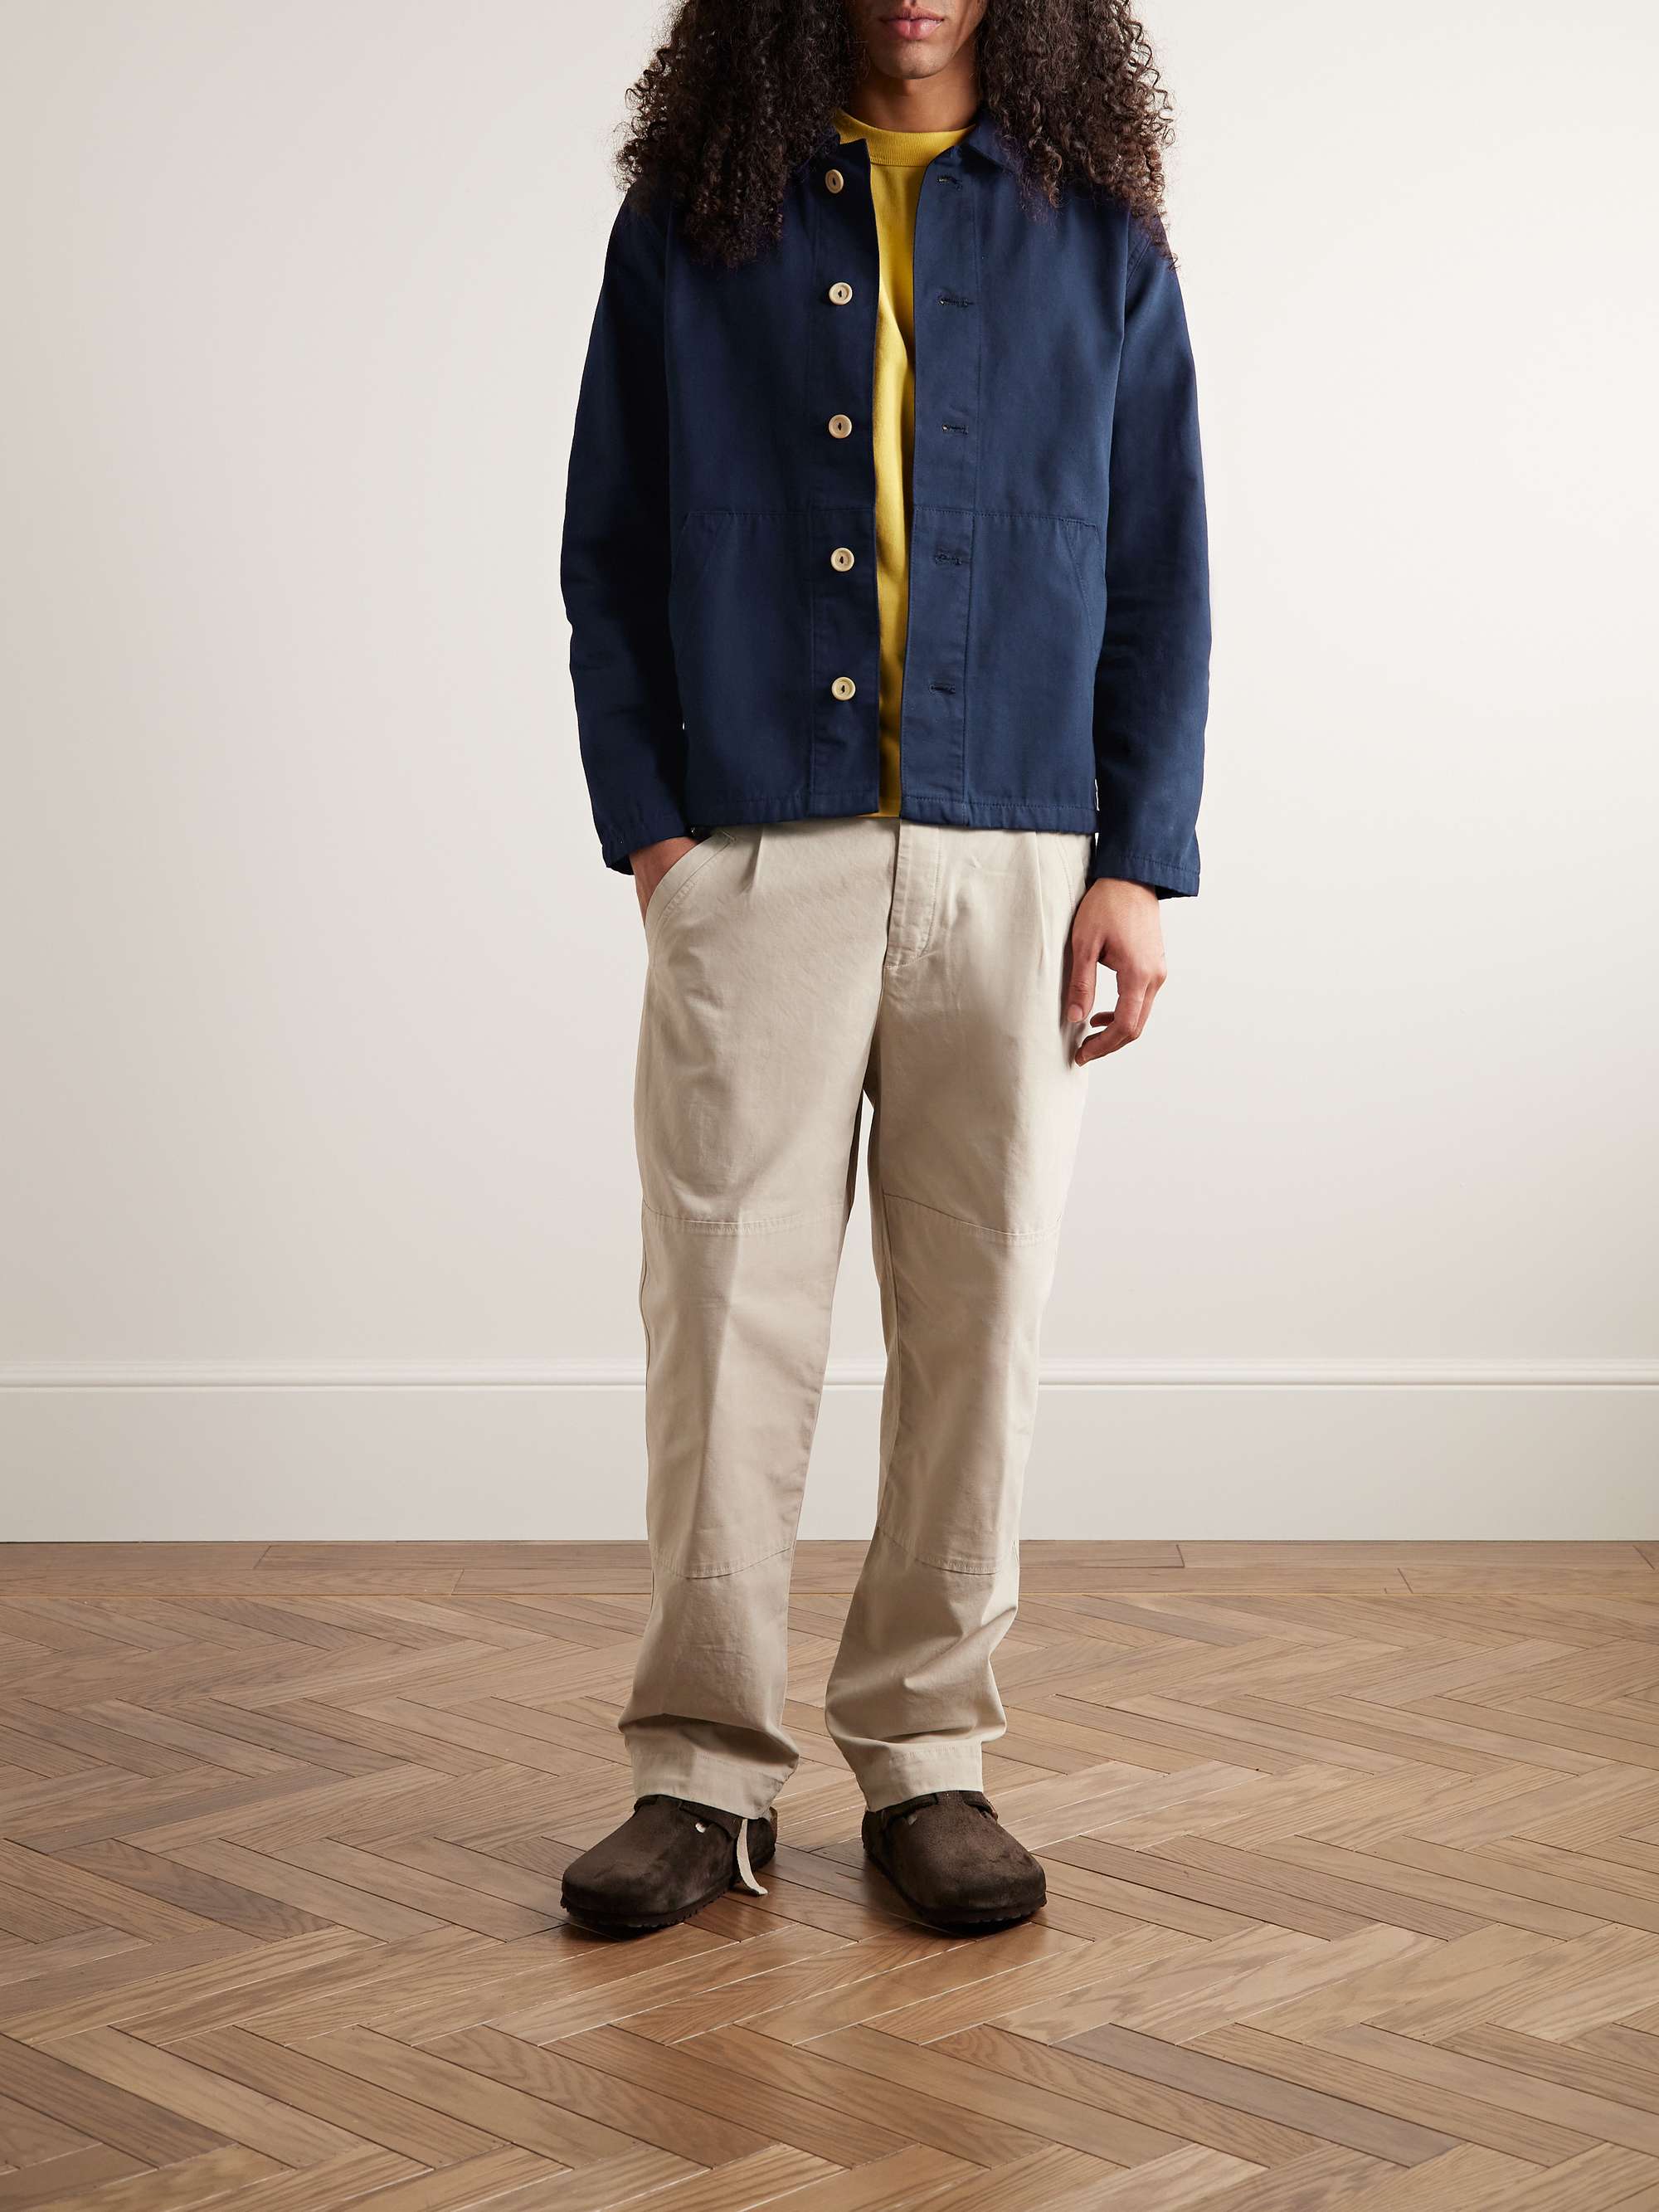 ARMOR-LUX Fisherman Cotton Jacket | MR PORTER